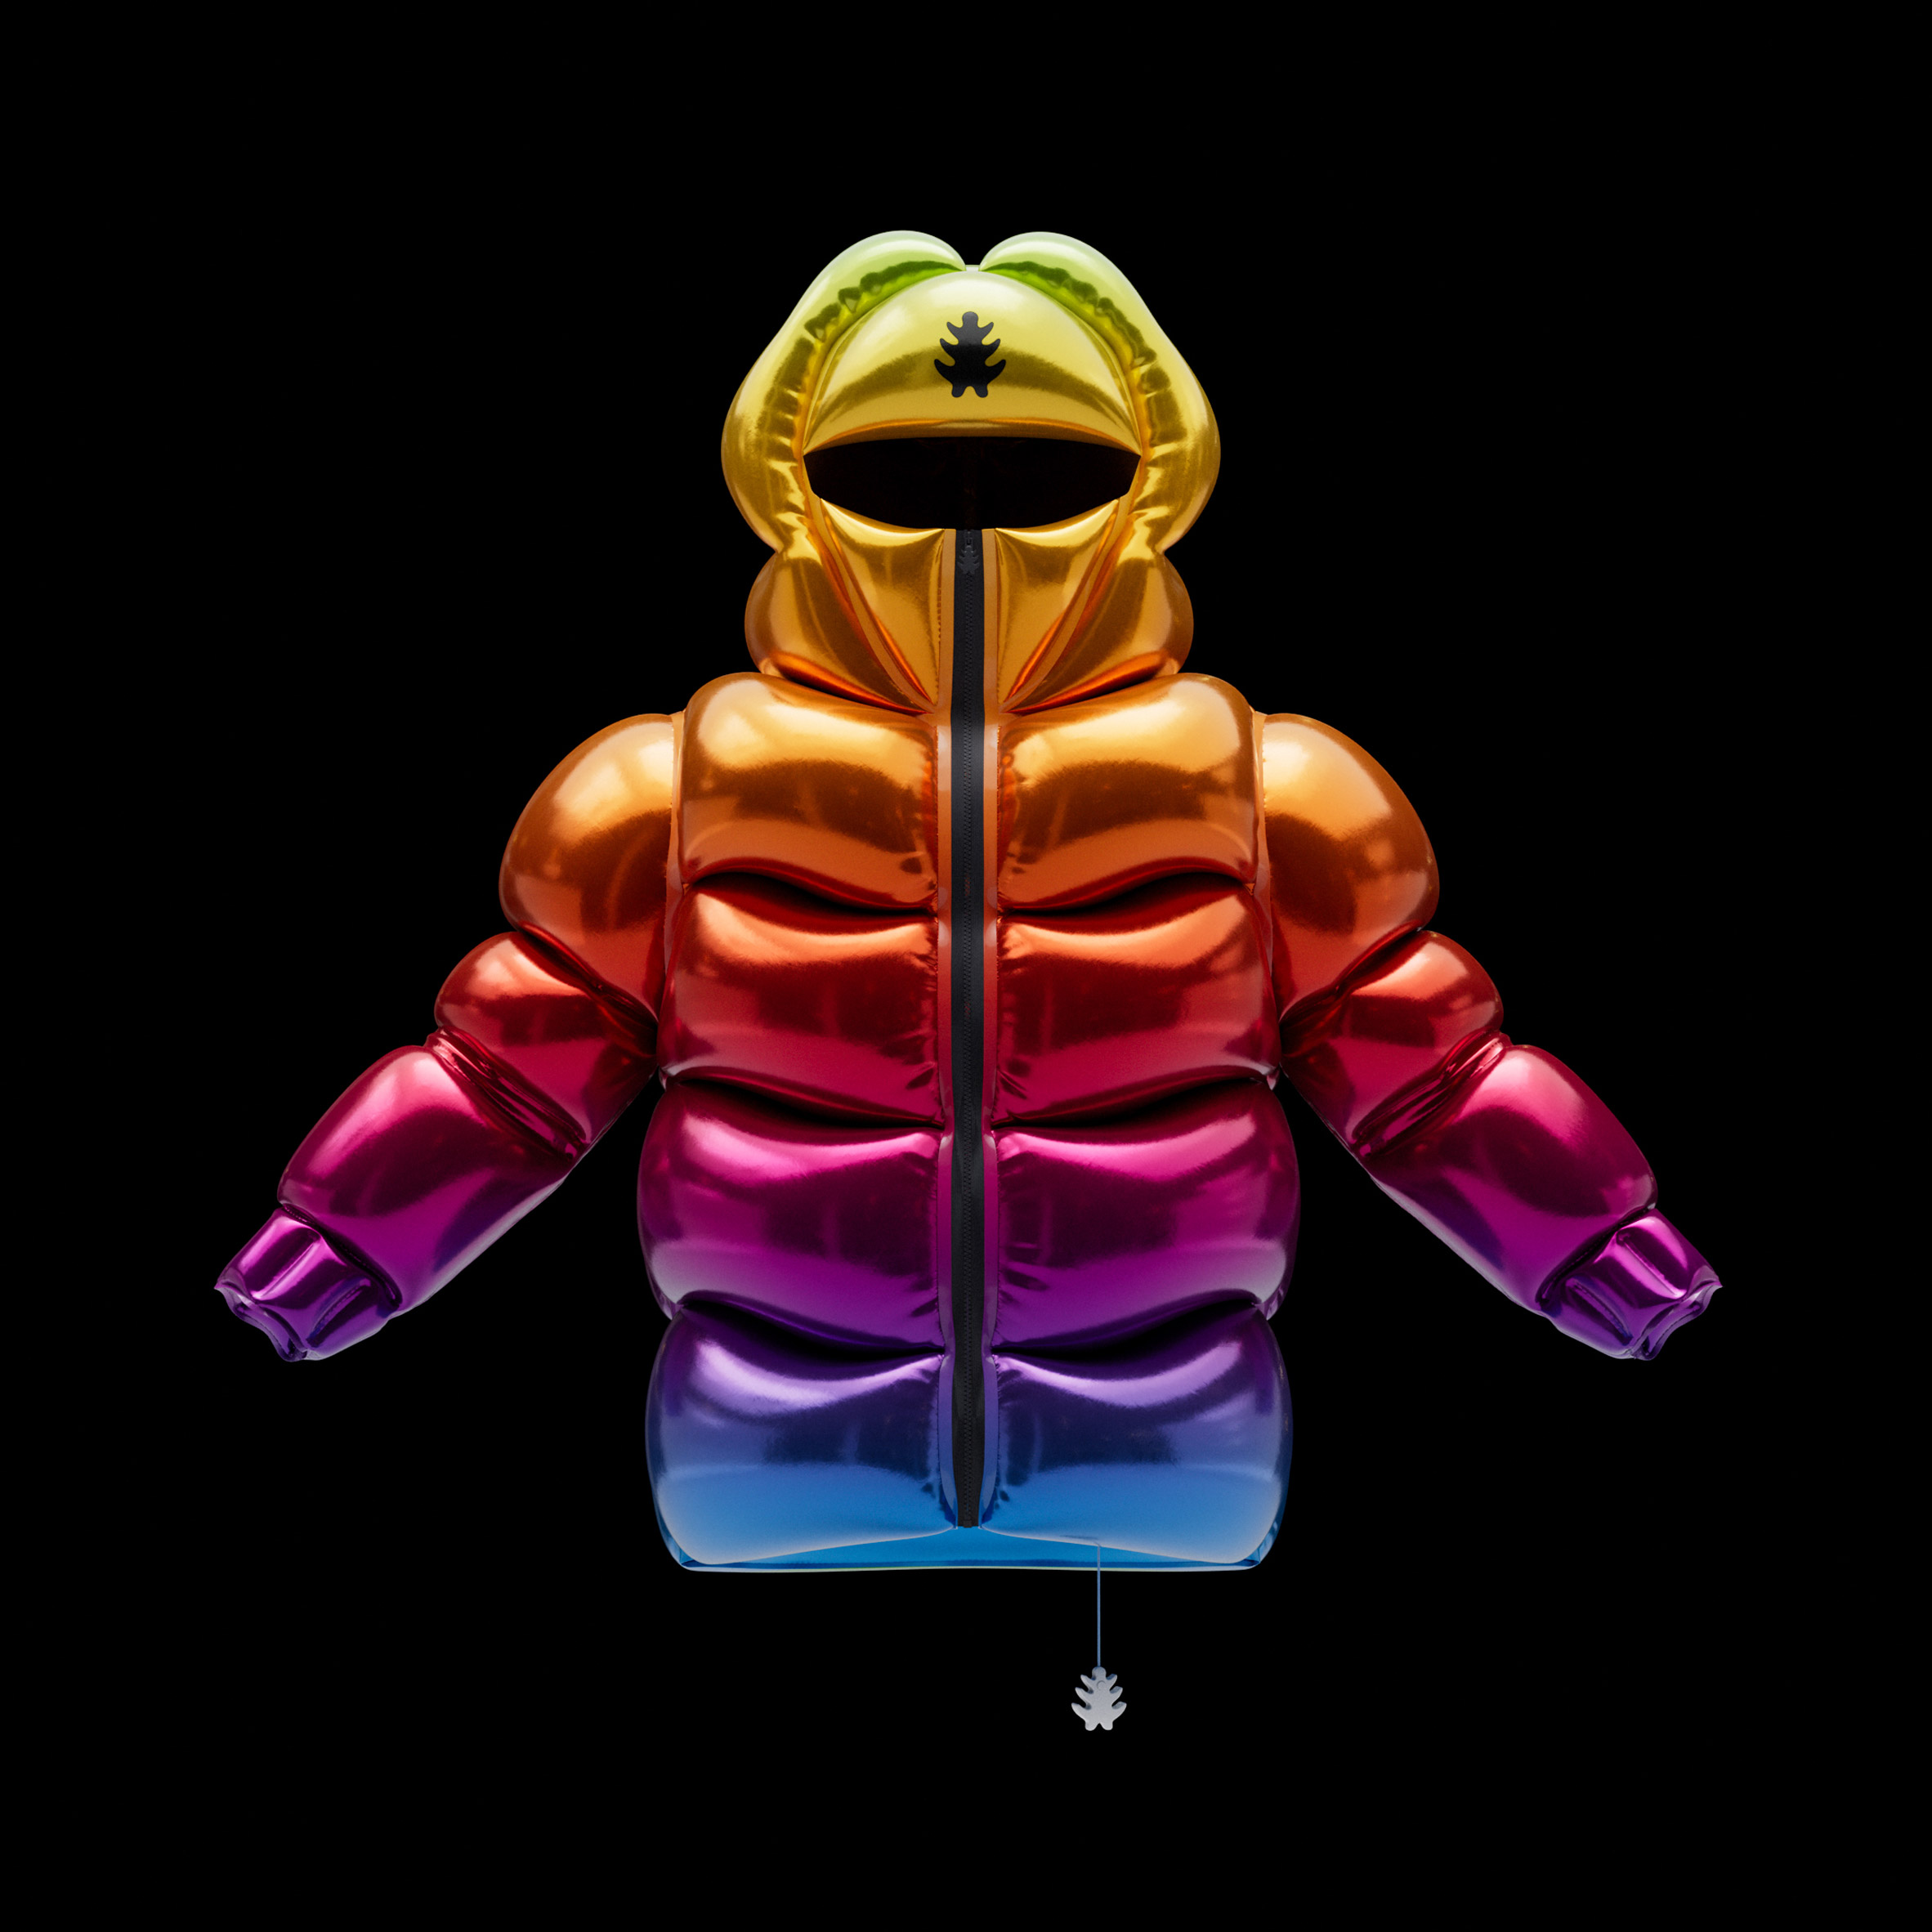 Helium-10000 jacket in rainbow gradient by Andrew Kostman